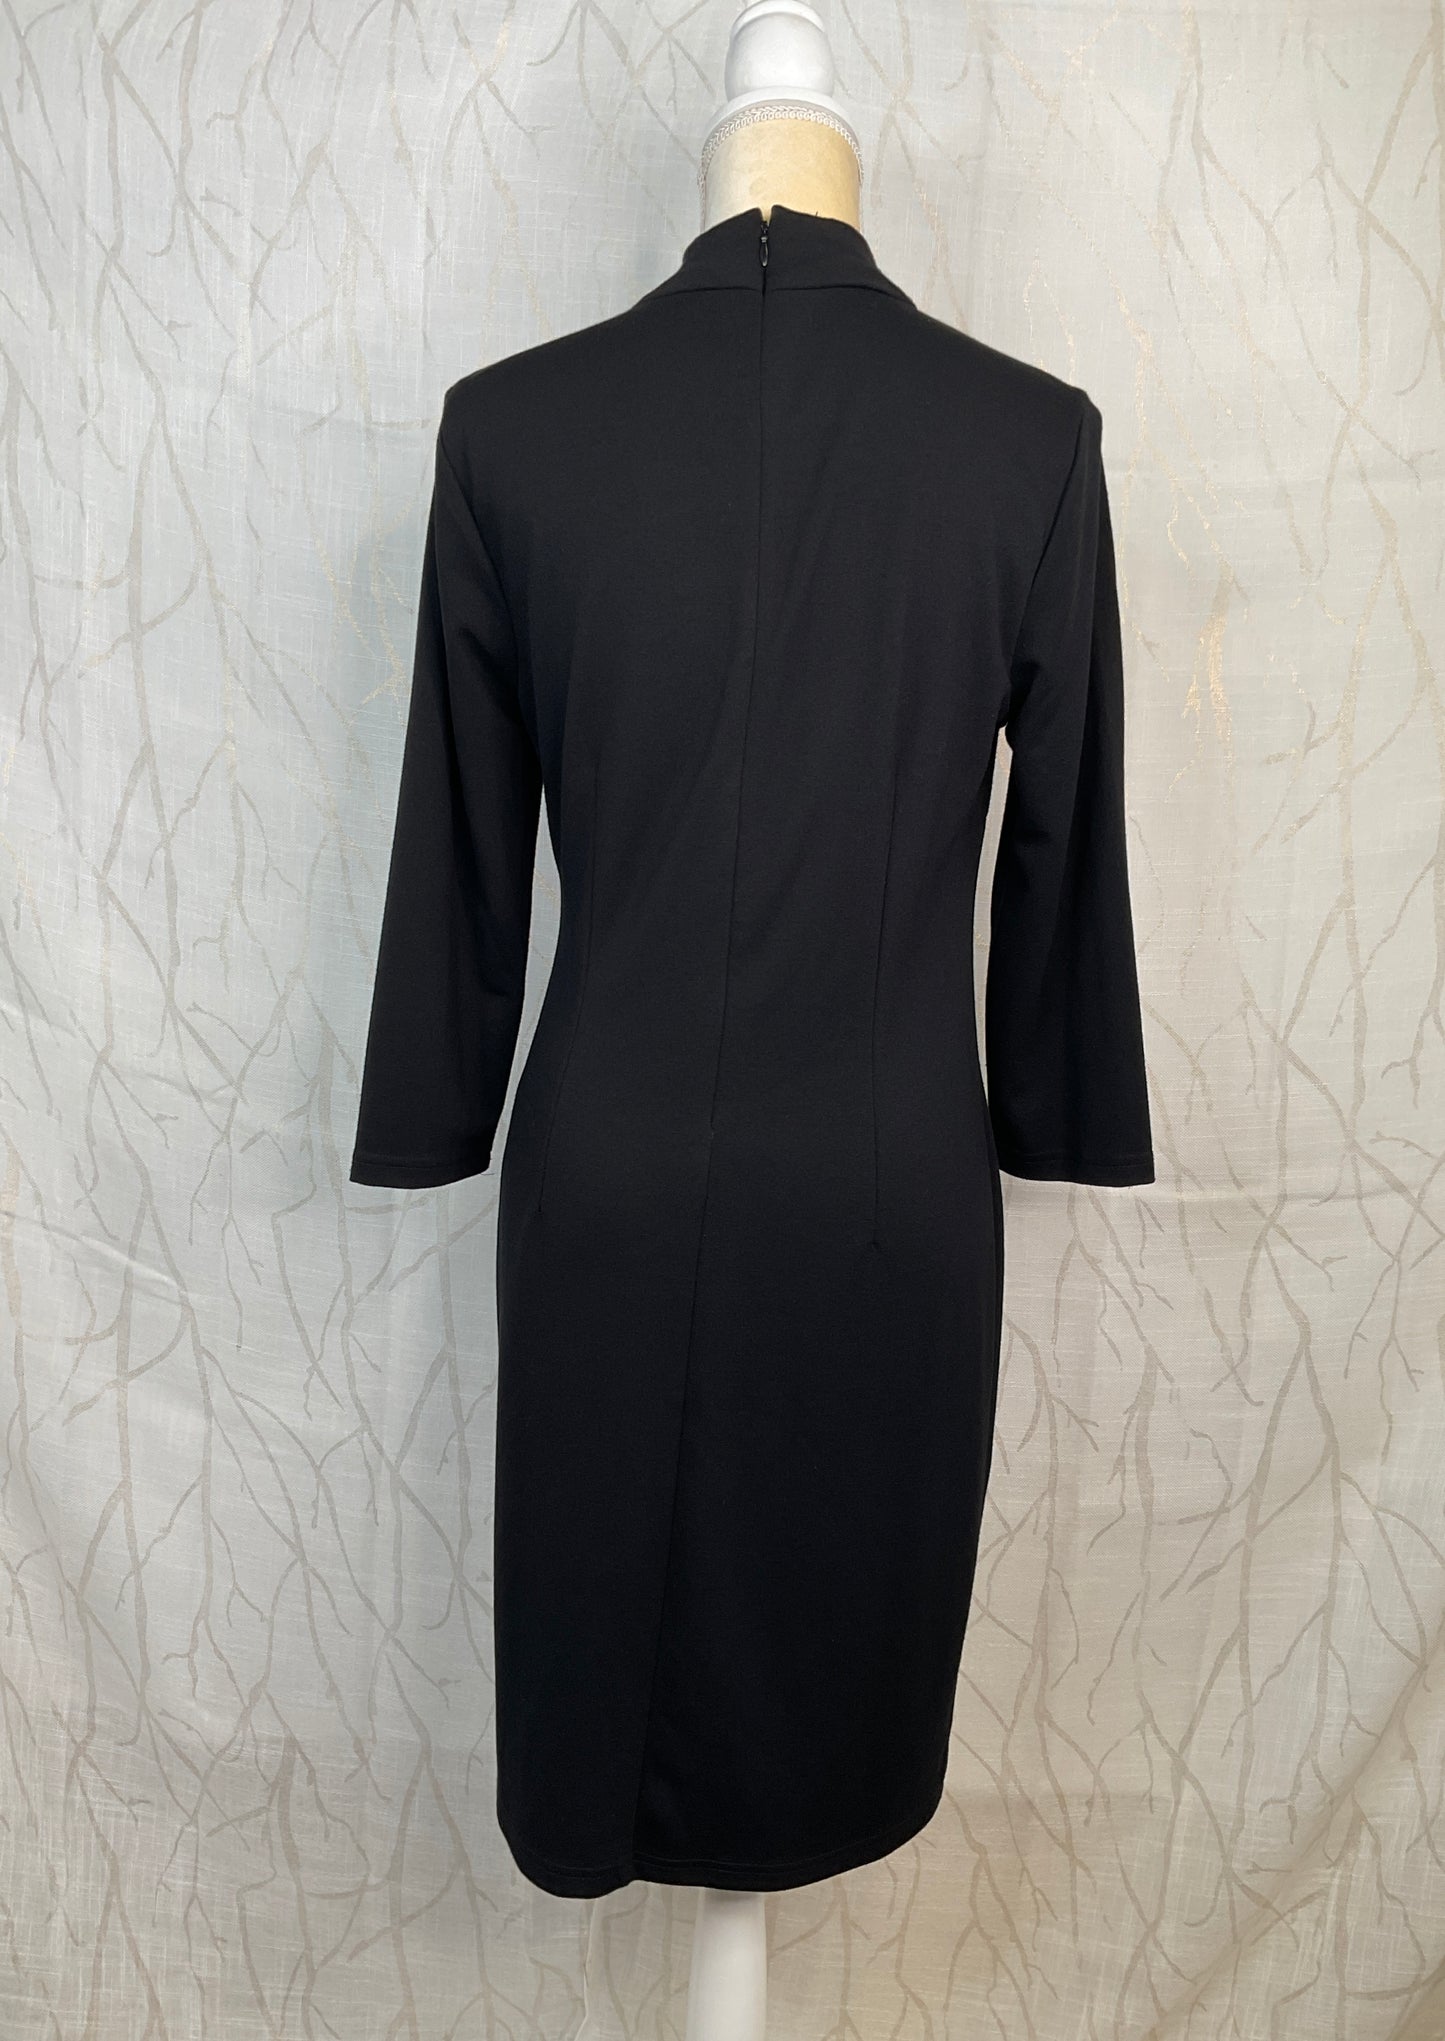 Spense Black Dress, Size 10